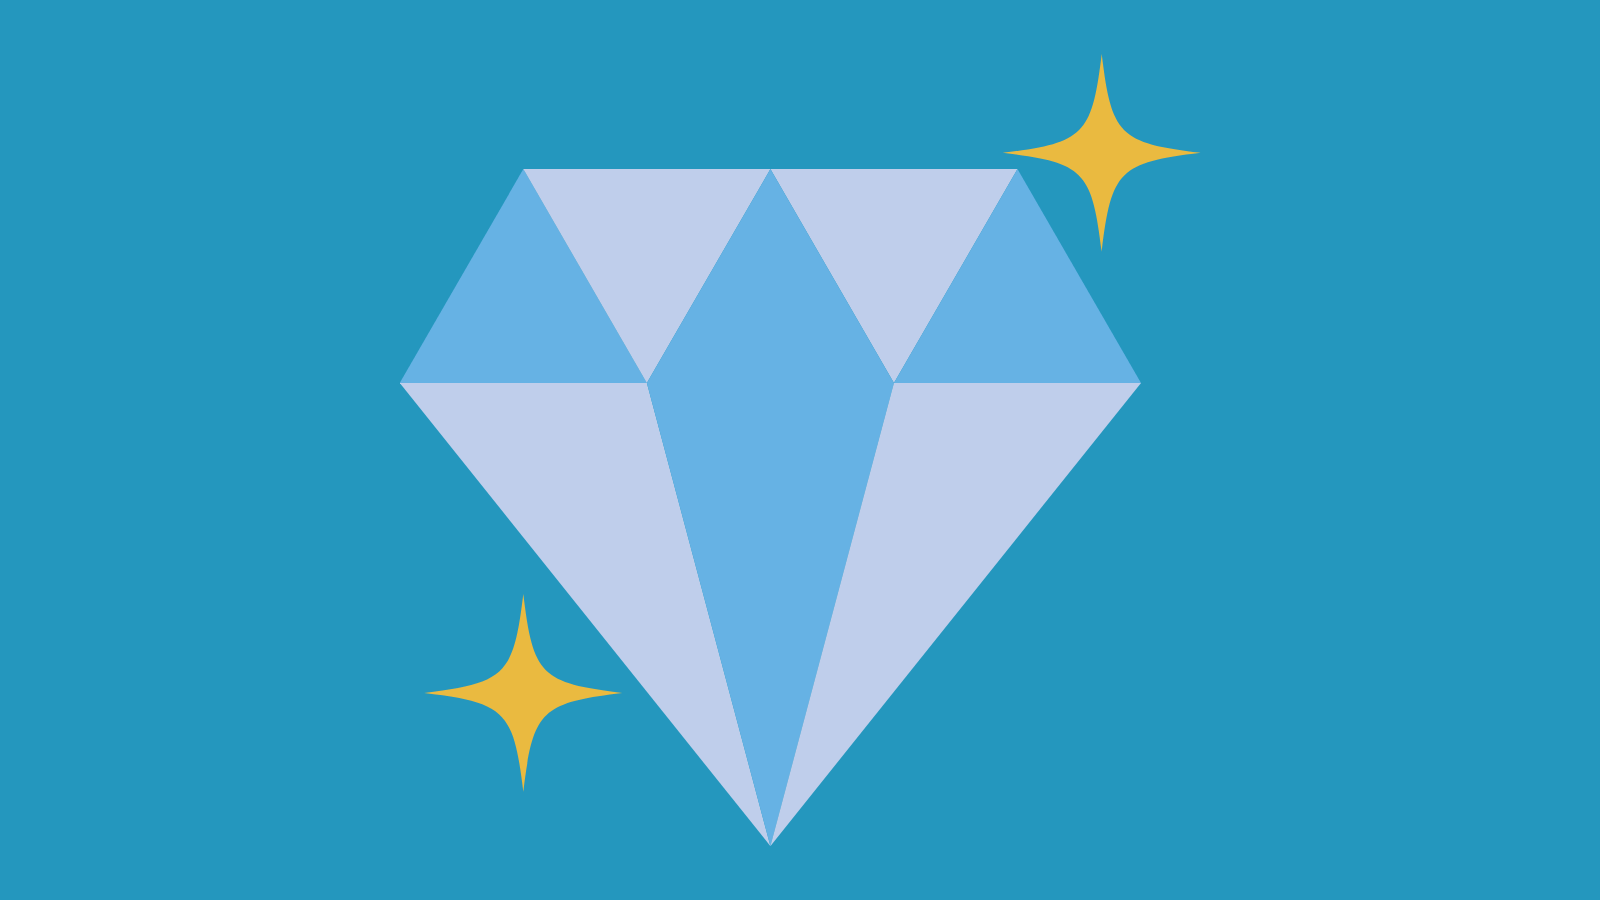 A graphic of a diamond